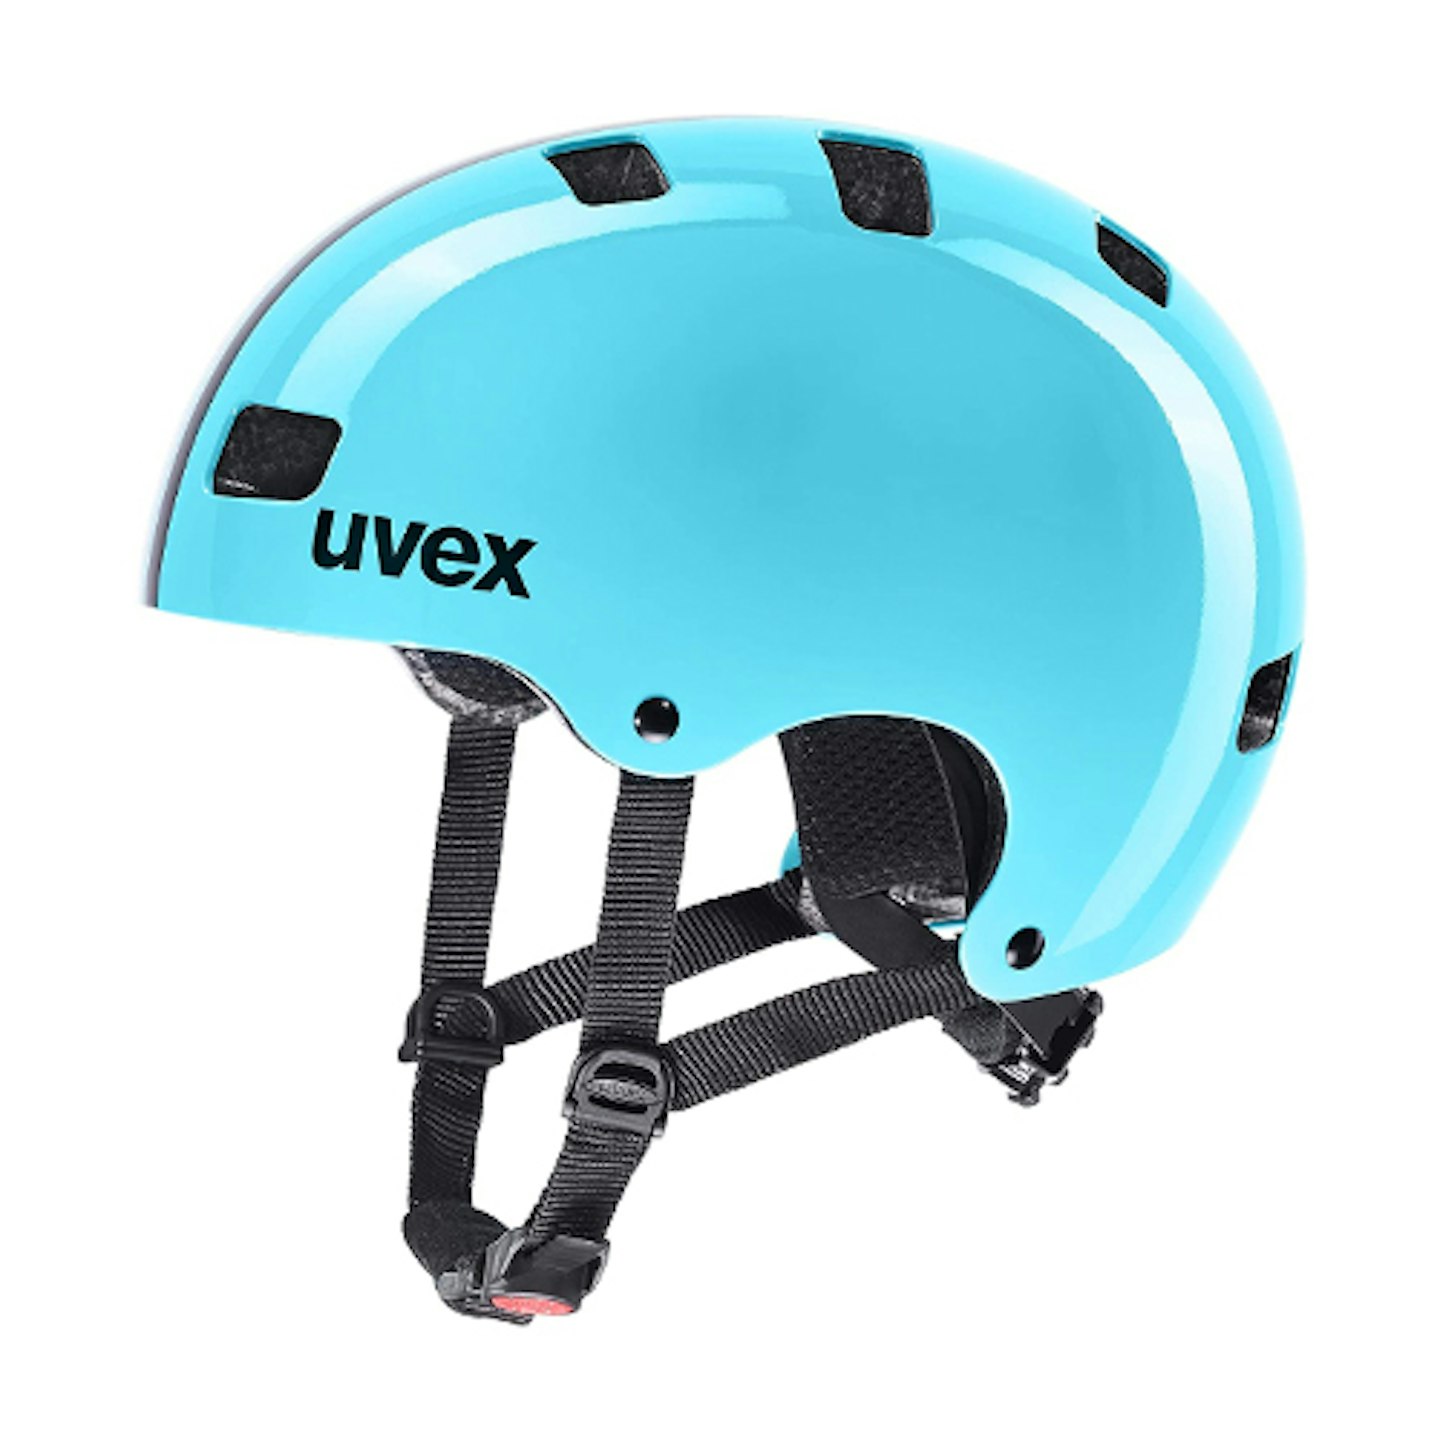 Uvex Unisex Youth Bike Helmet